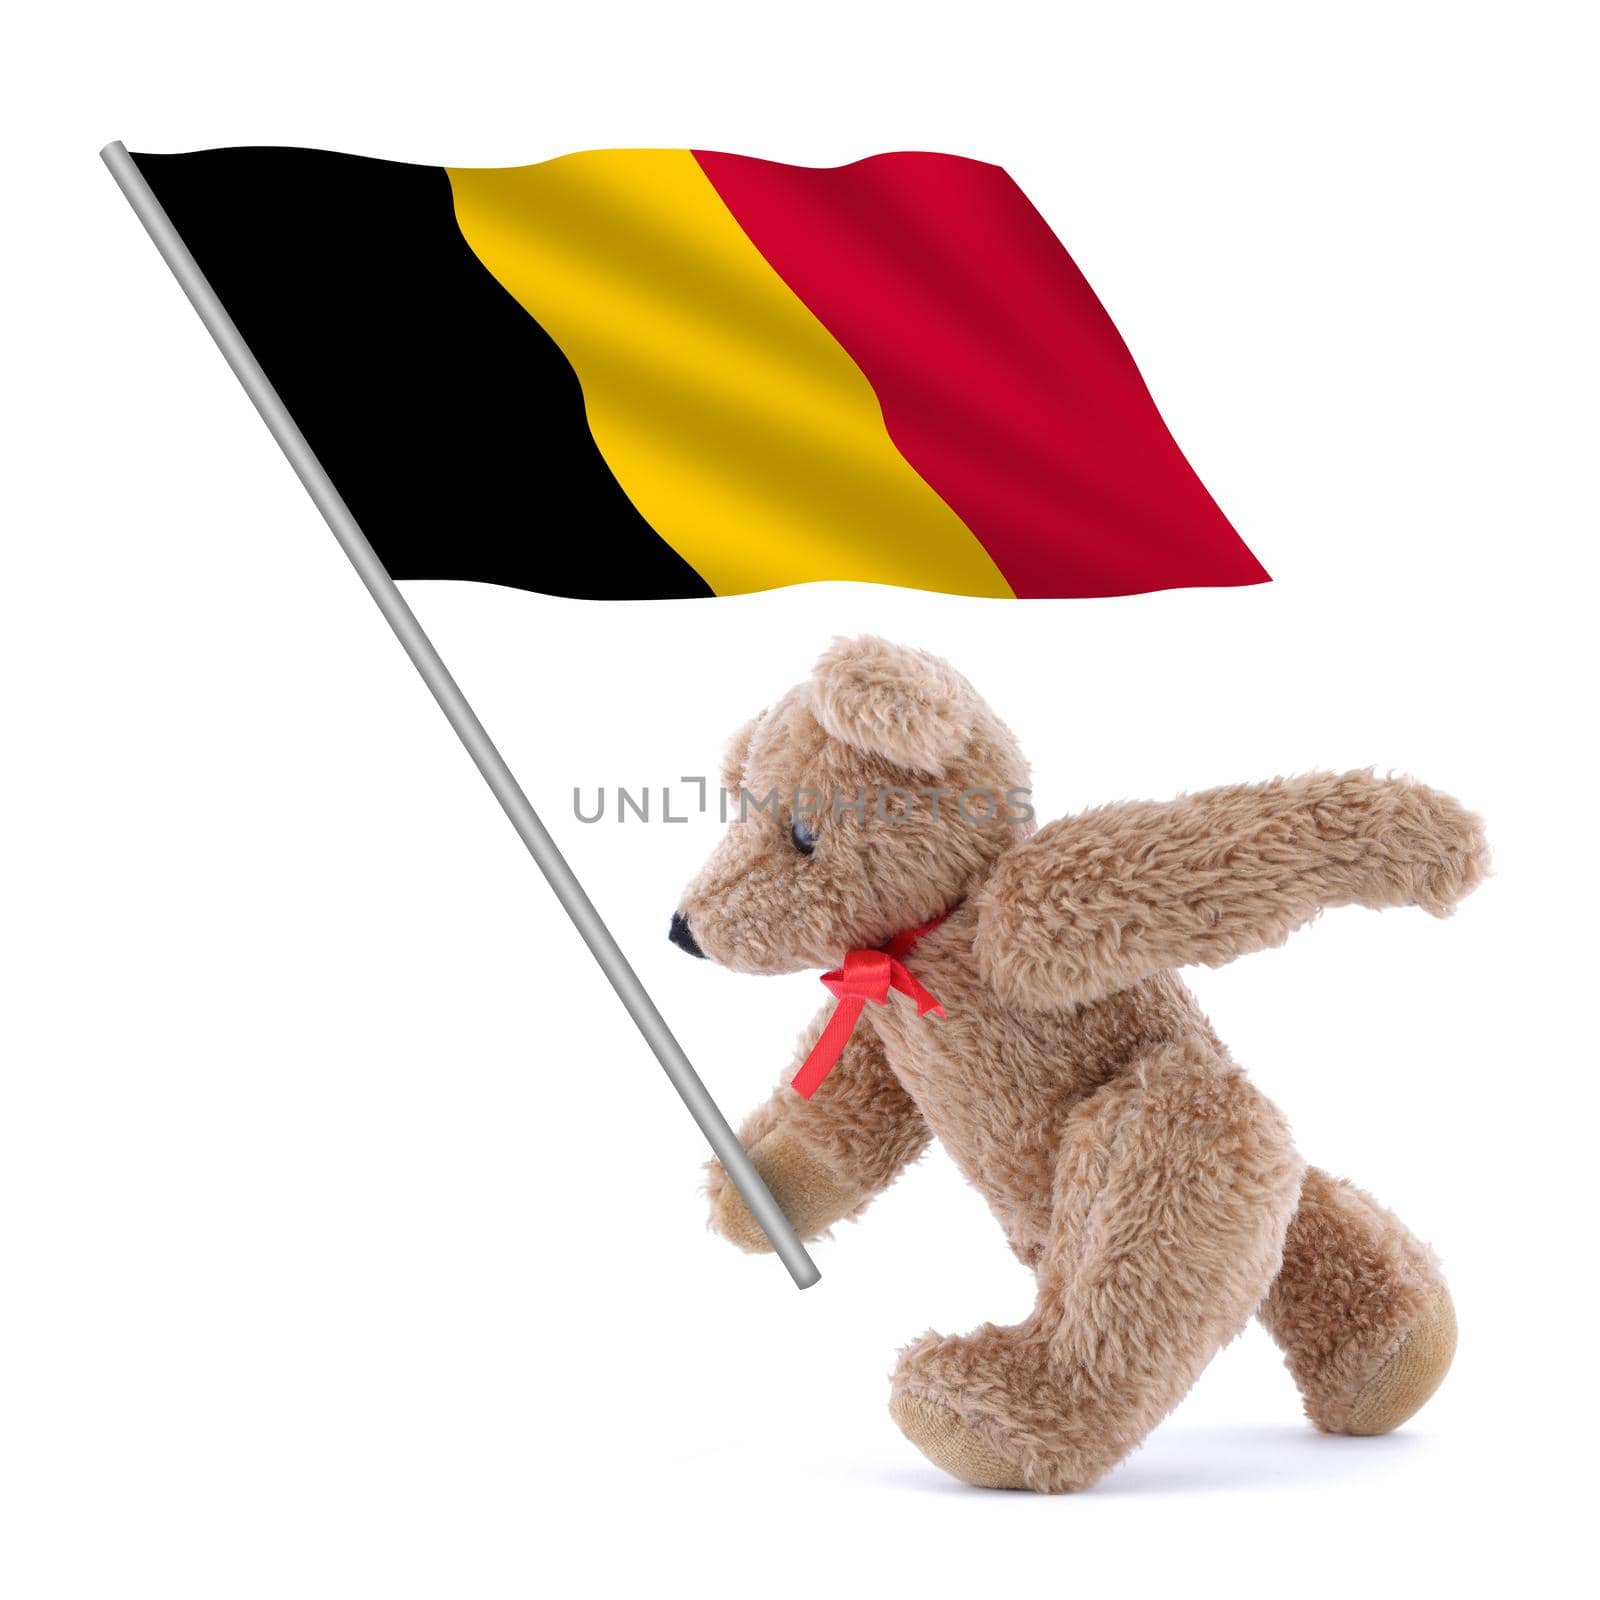 A Belgium flag being carried by a cute teddy bear